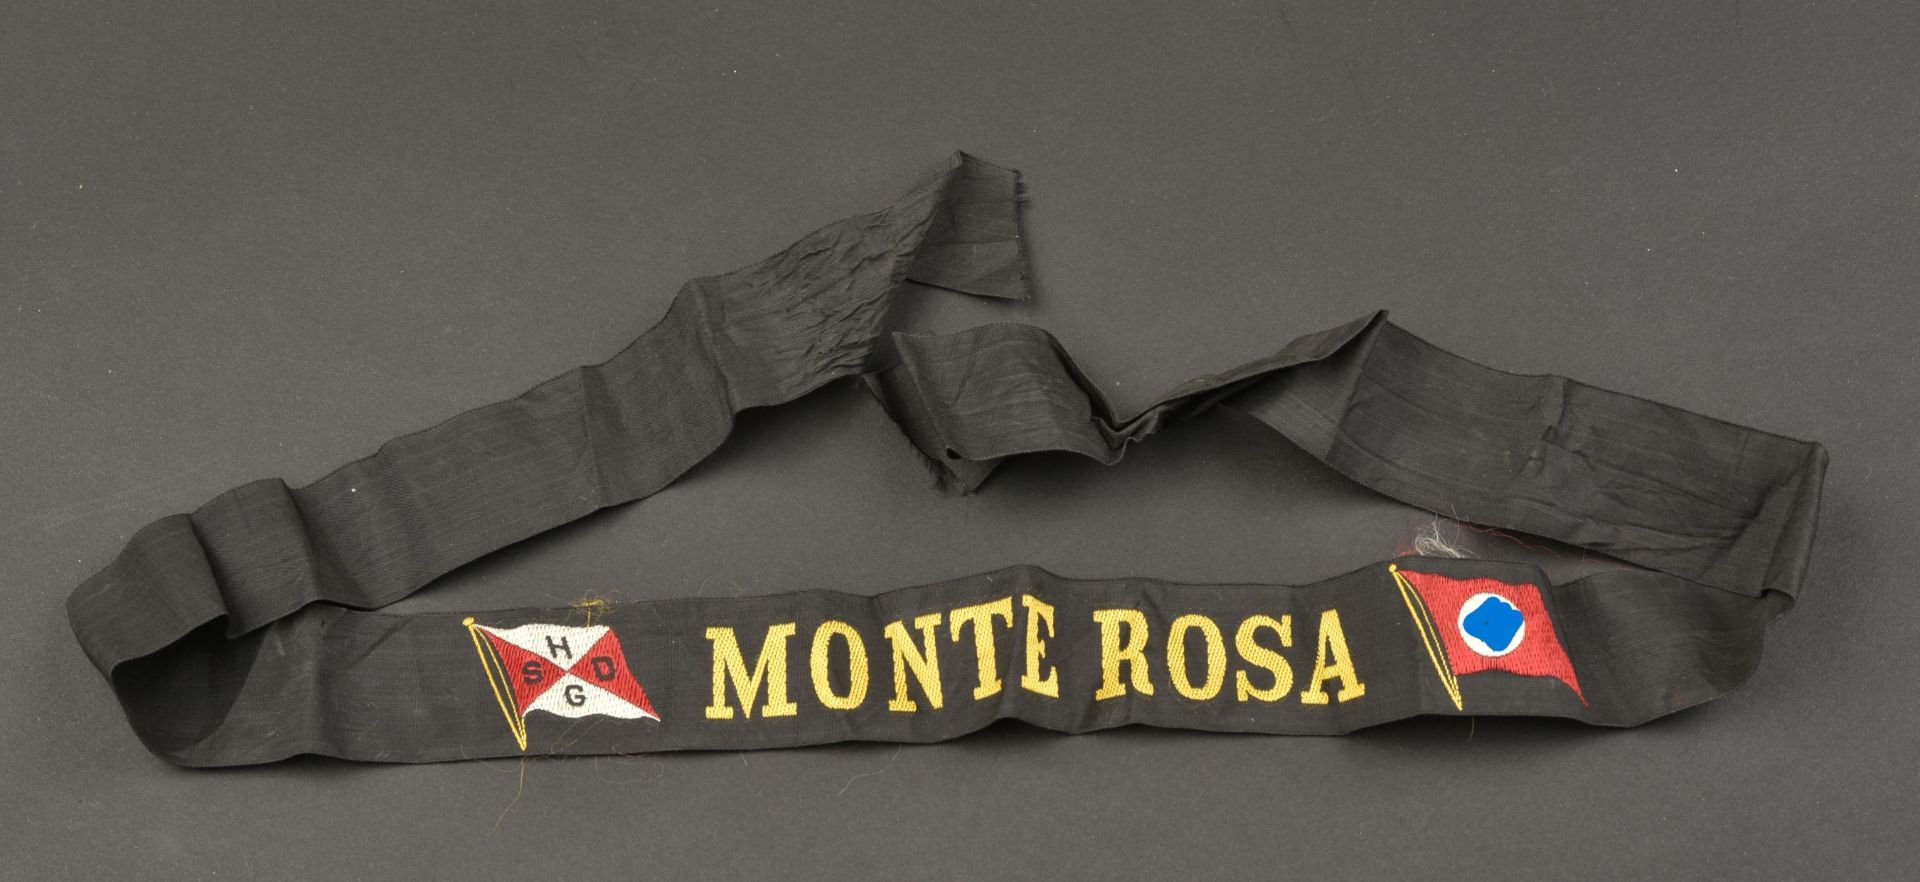 Bande de ba chi Monte Rosa. Monte Rosa band. - Image 3 of 4